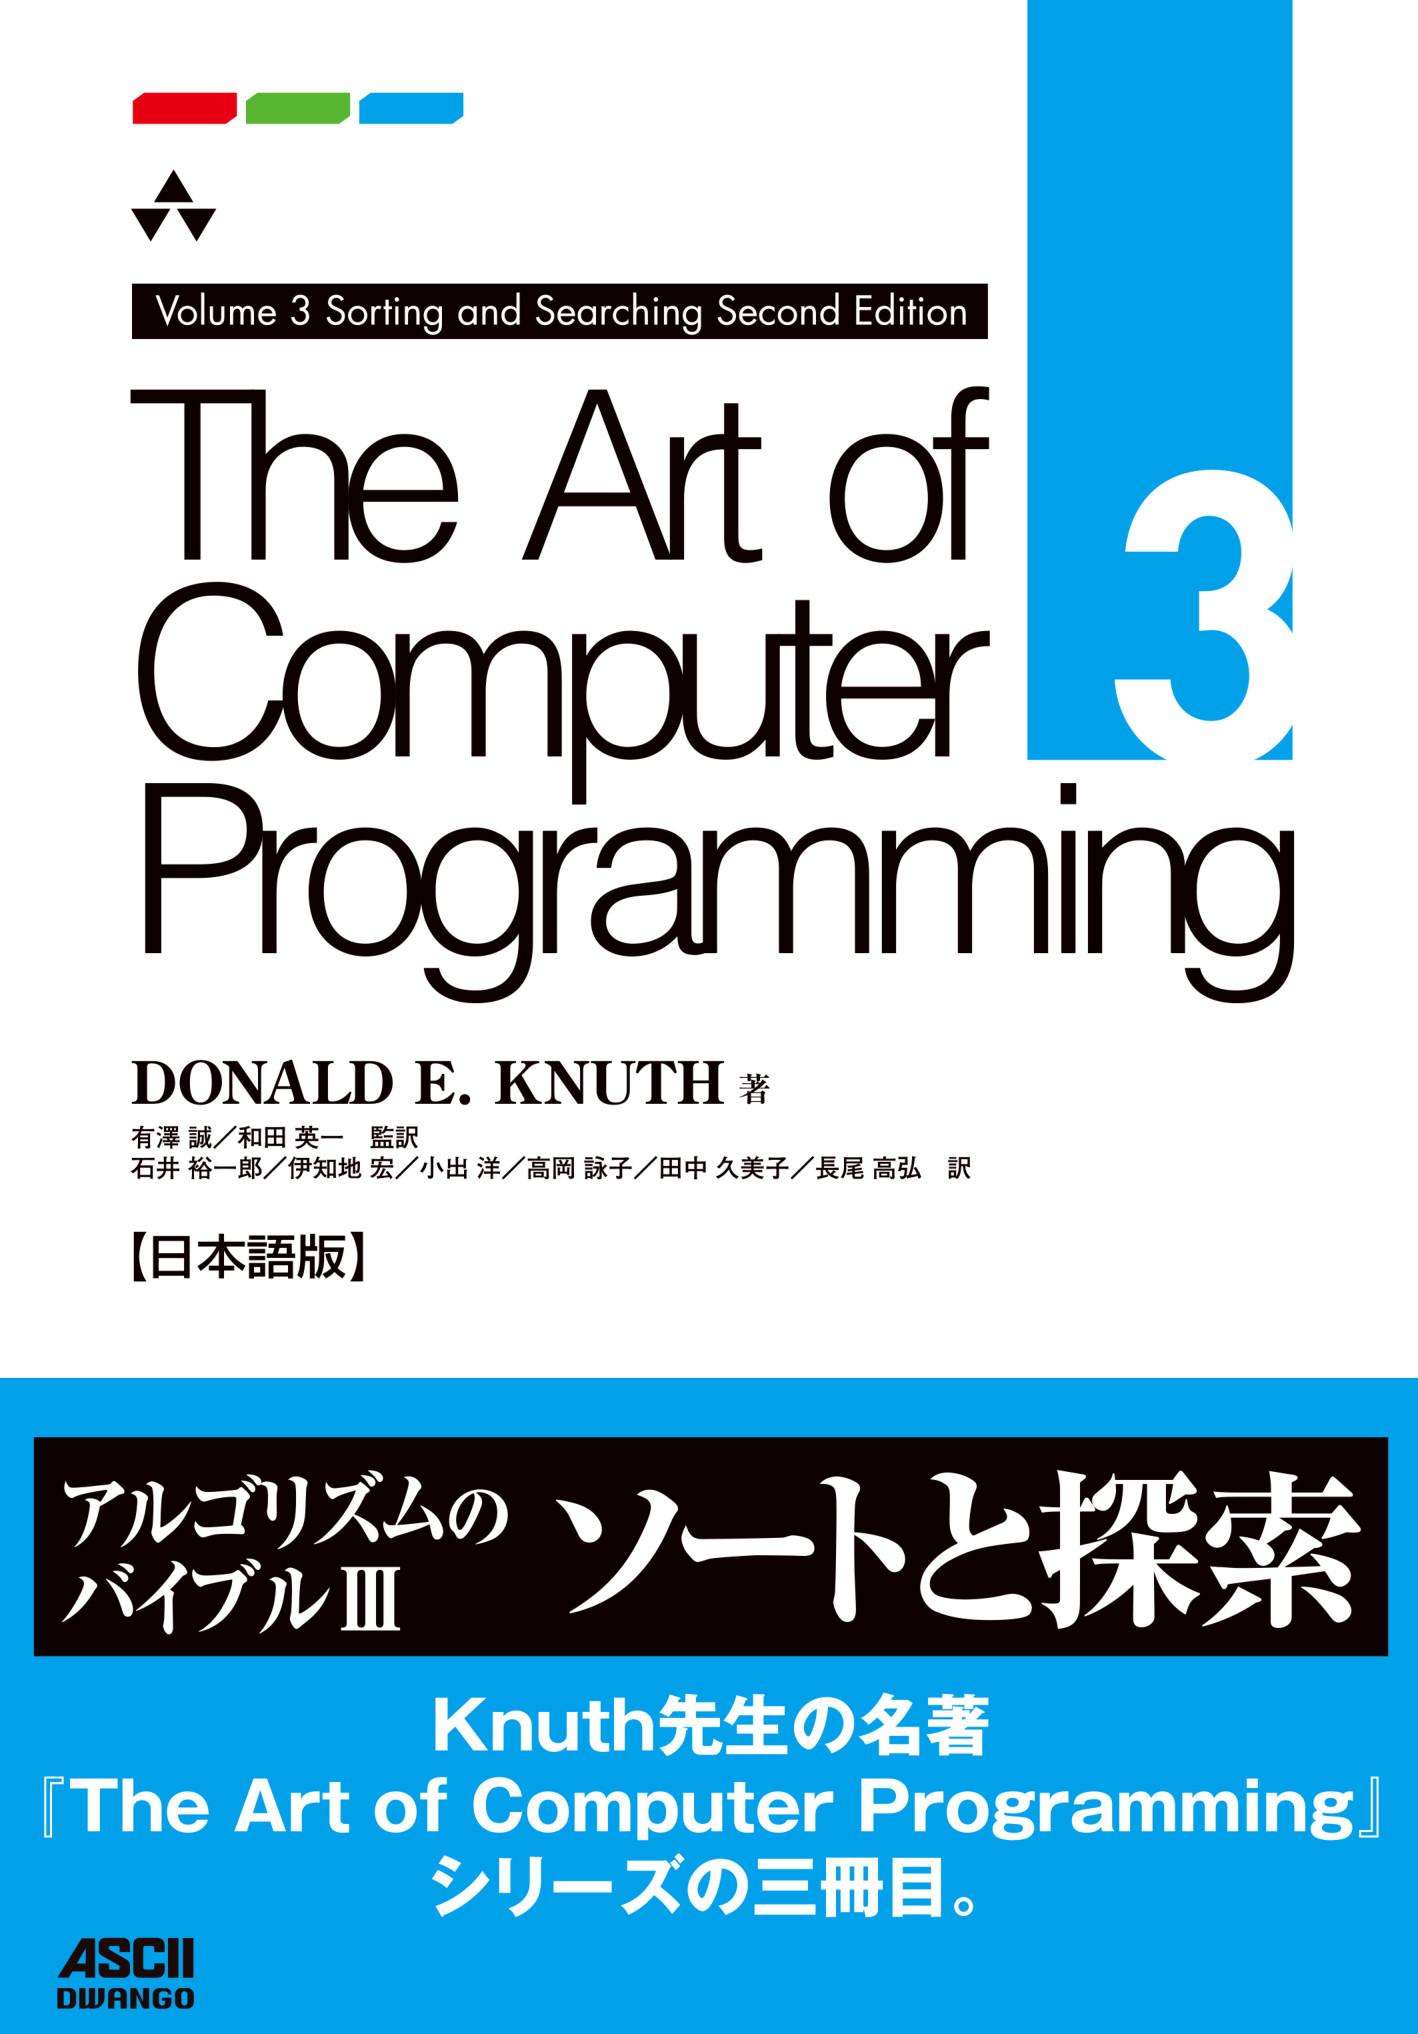 The Art of Computer Programming Volume 3 Sorting and Searching Second  Edition 日本語版【委託】 - 達人出版会